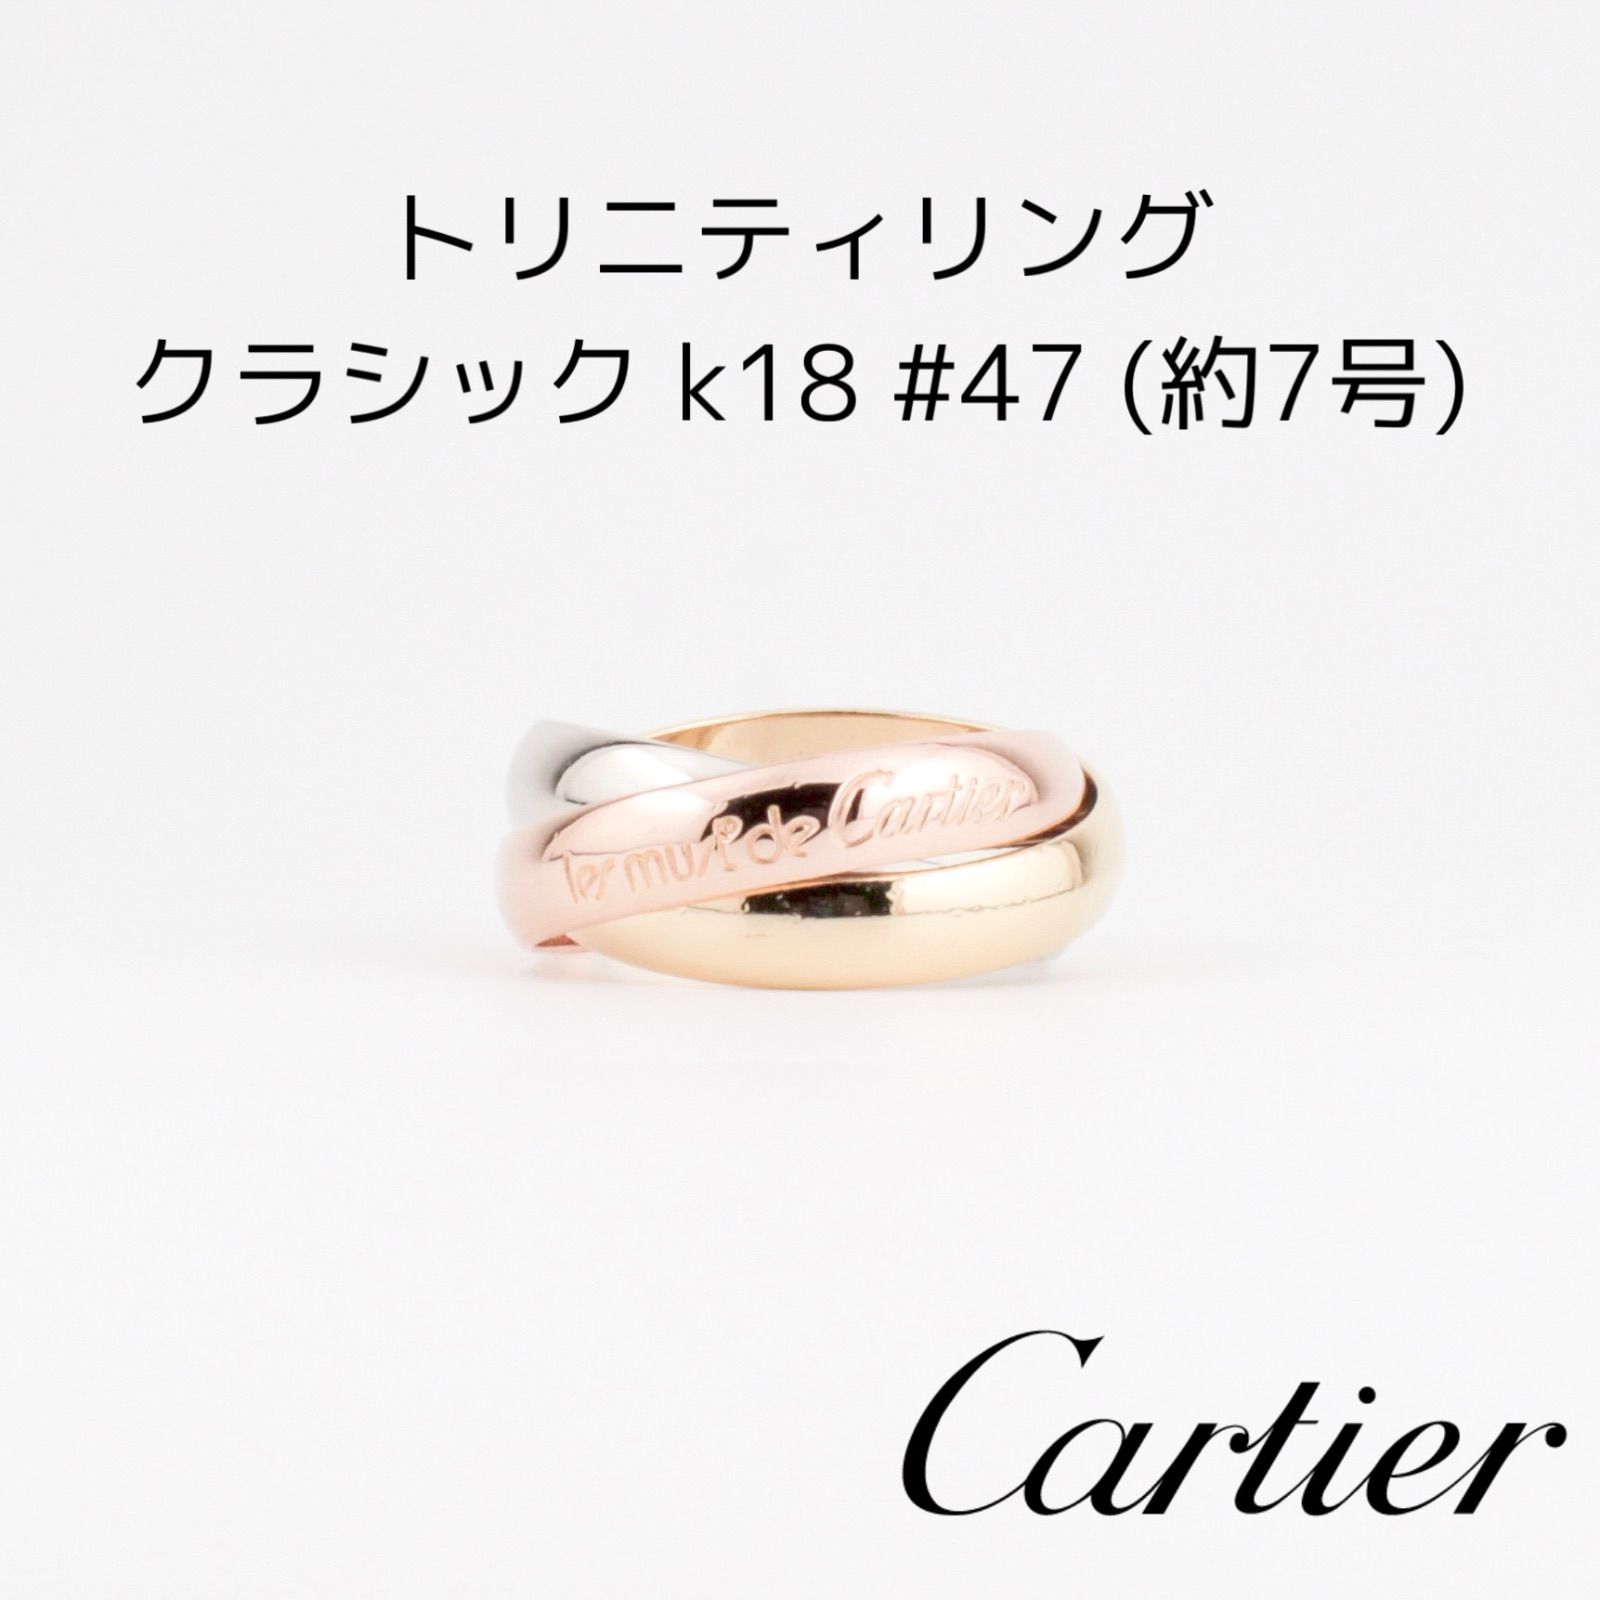 Cartier カルティエ トリニティリング クラシック k18 7号-